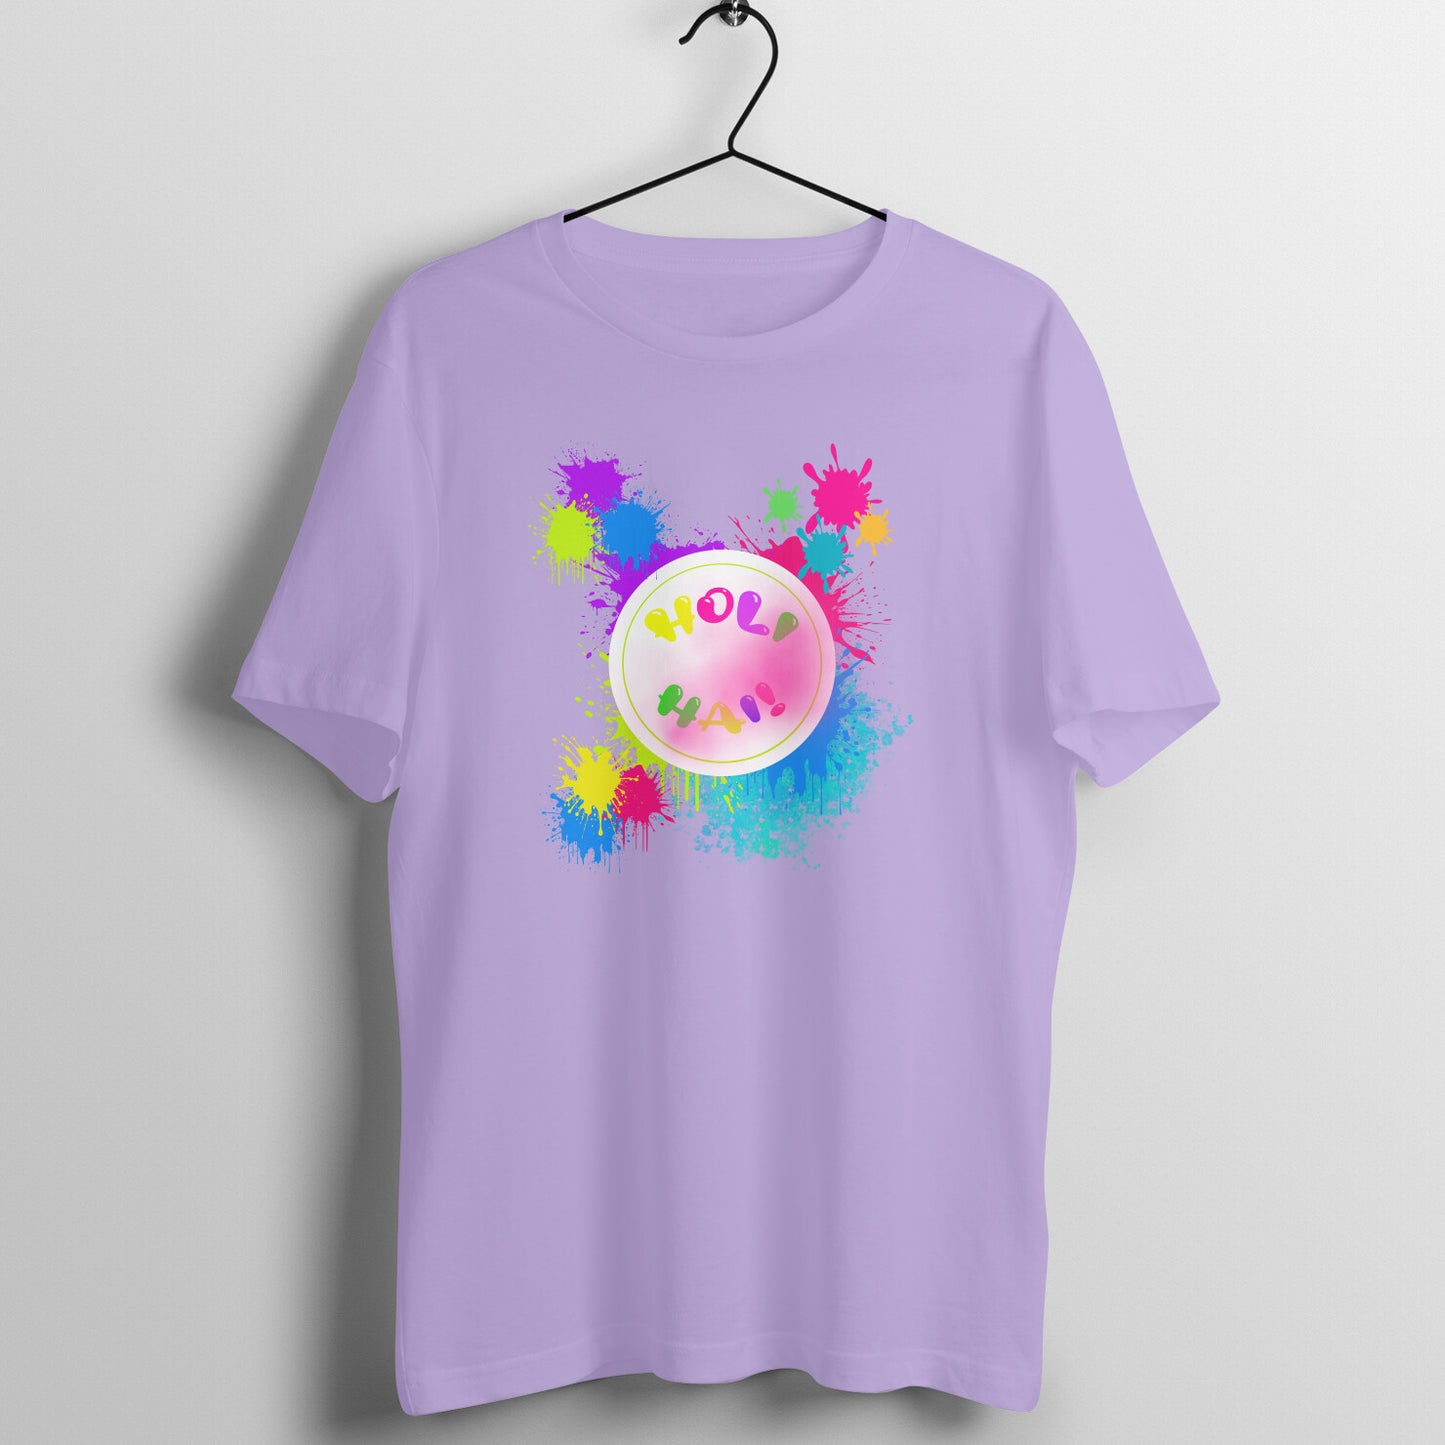 Playful Holi Essential: Men's Round Neck T-Shirt for Festive Celebrations